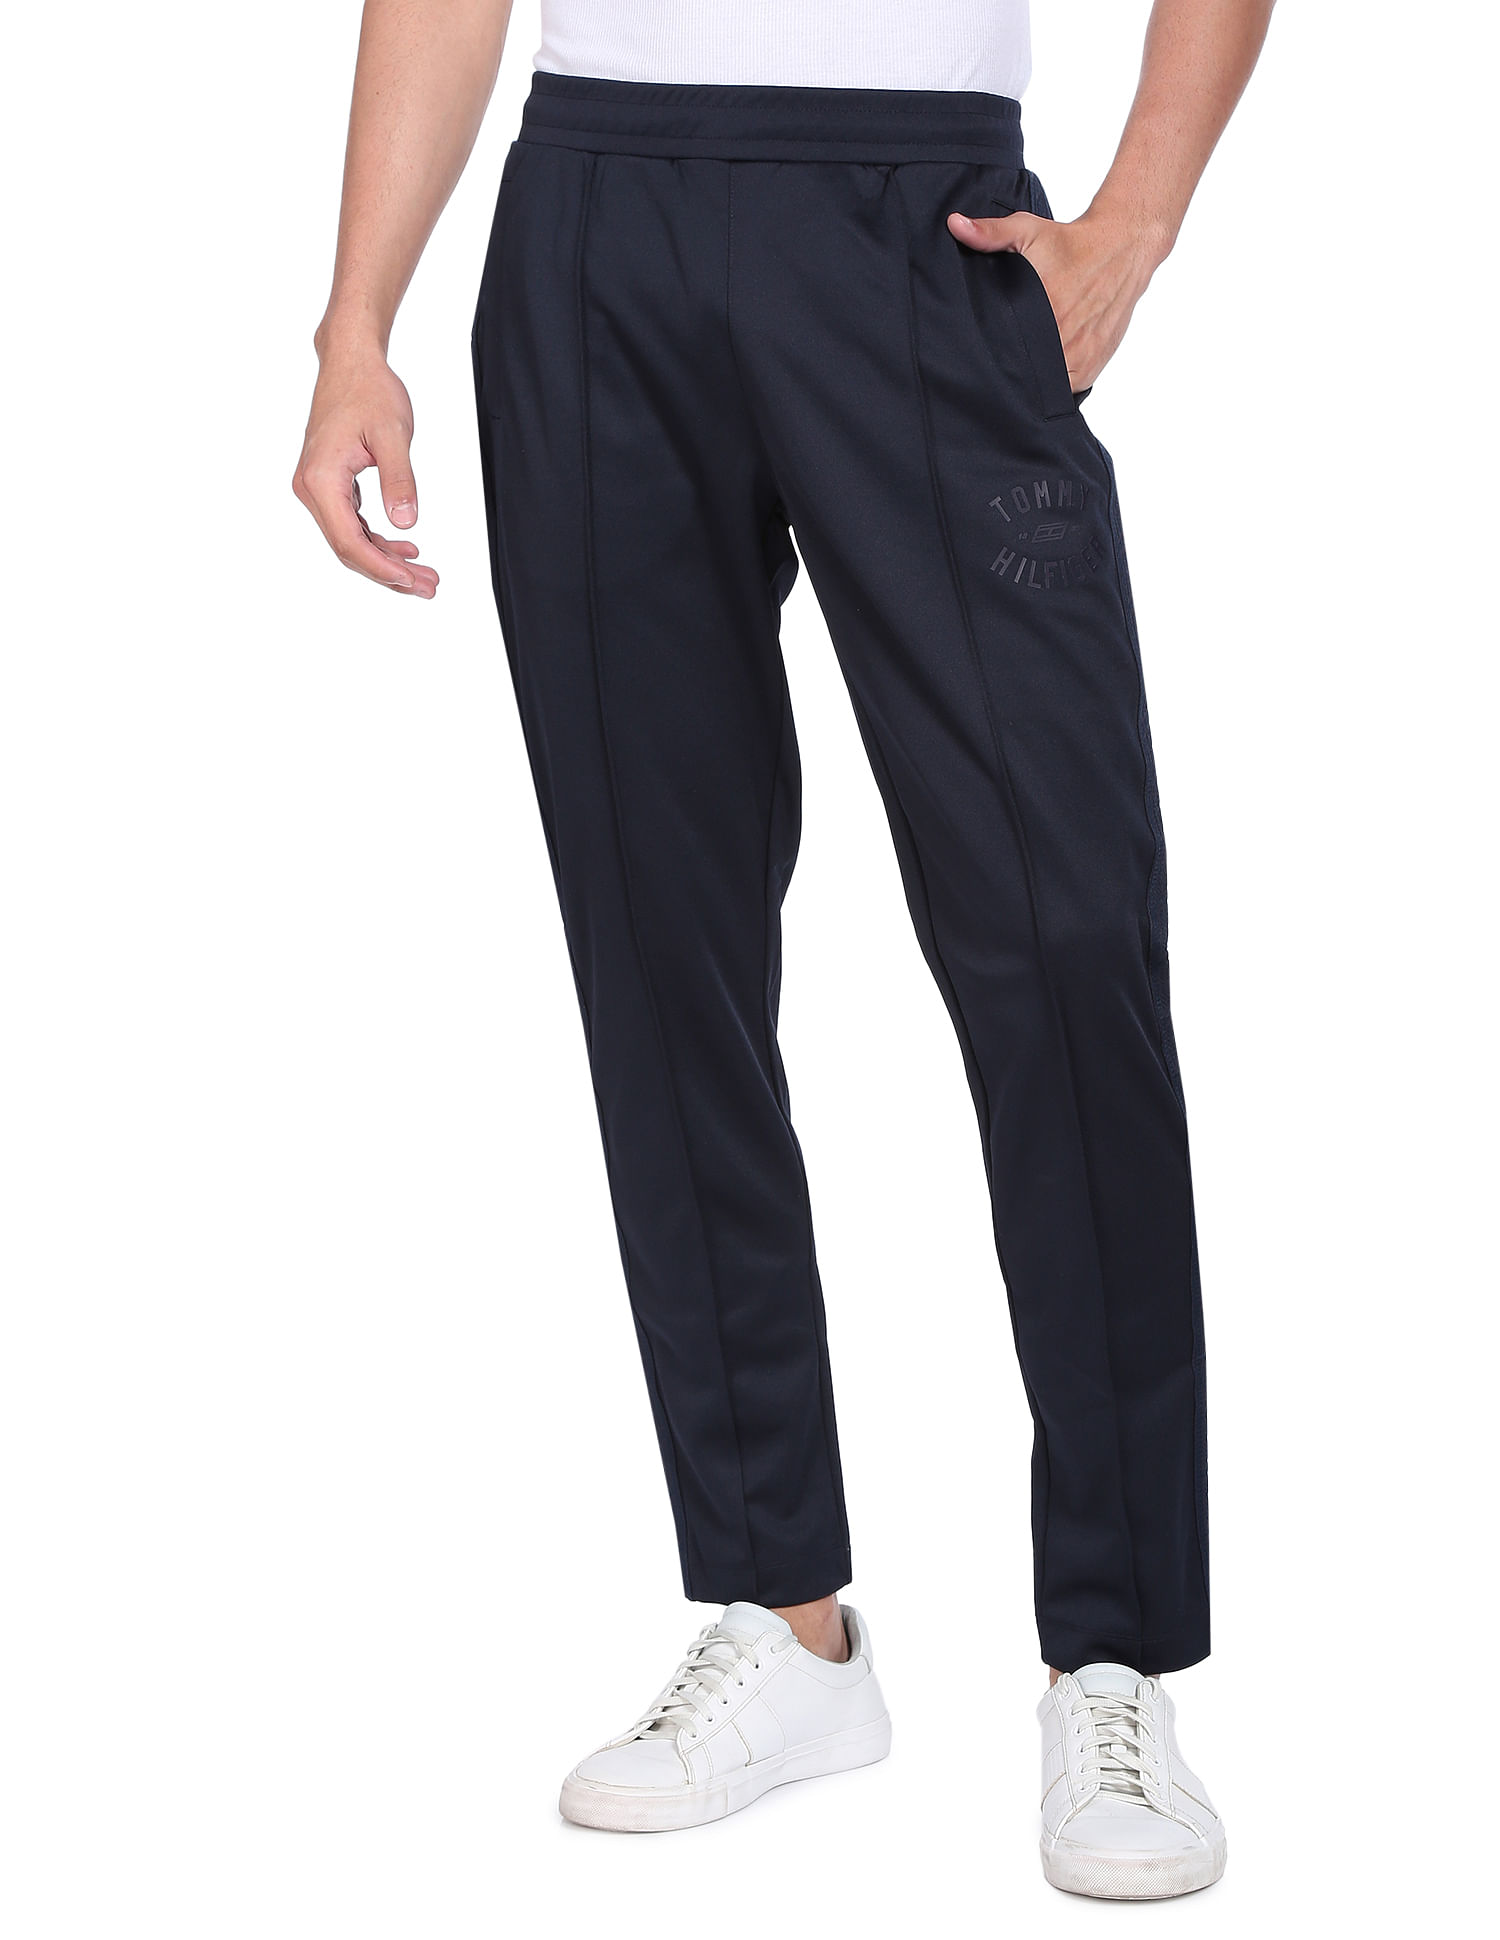 Sports52 Wear Polyester Track Pants - Buy Sports52 Wear Polyester Track  Pants online in India